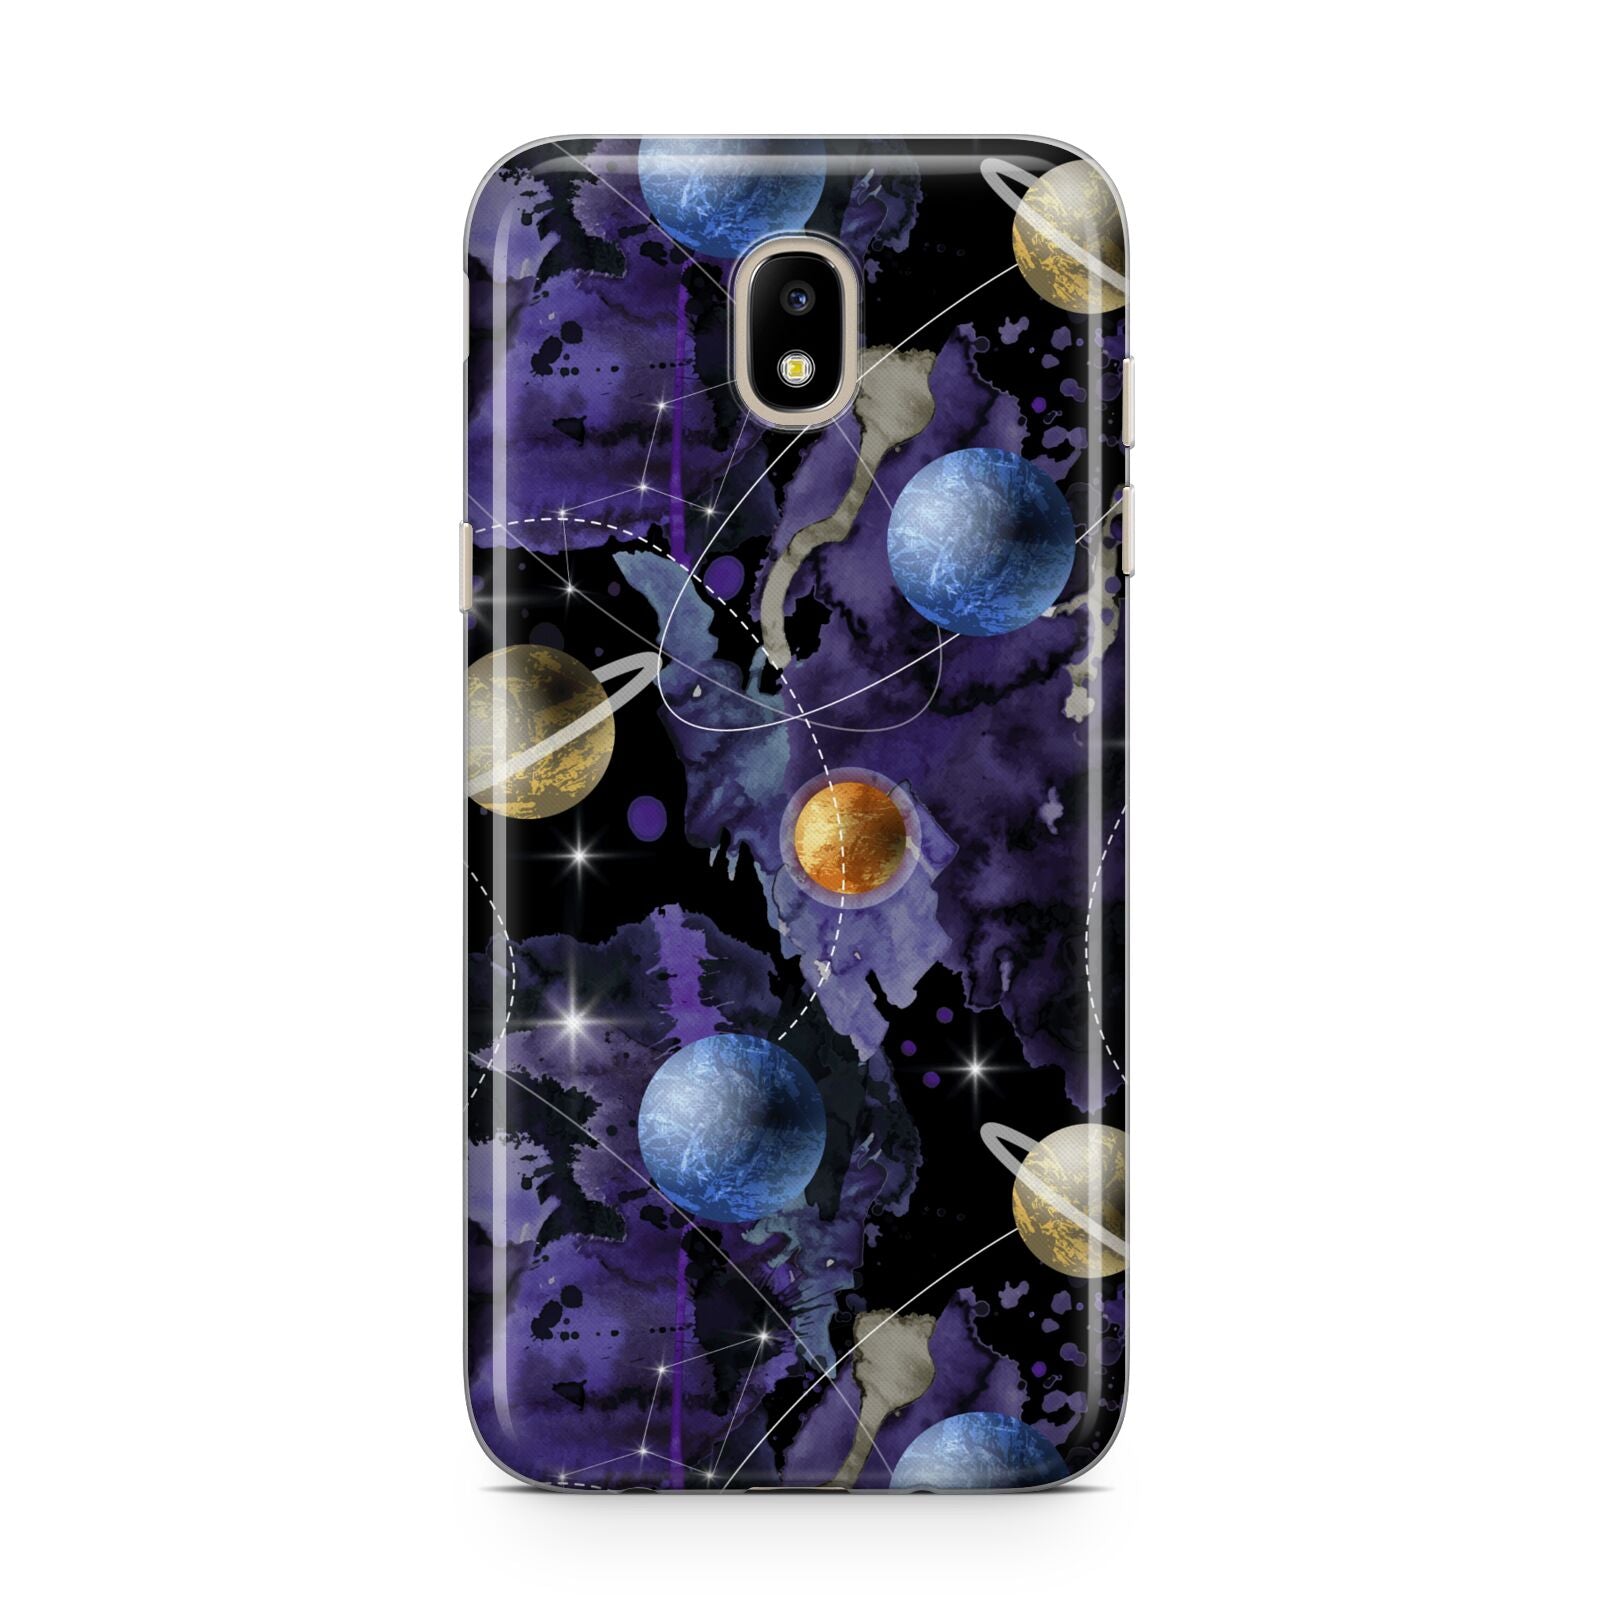 Planet Samsung J5 2017 Case